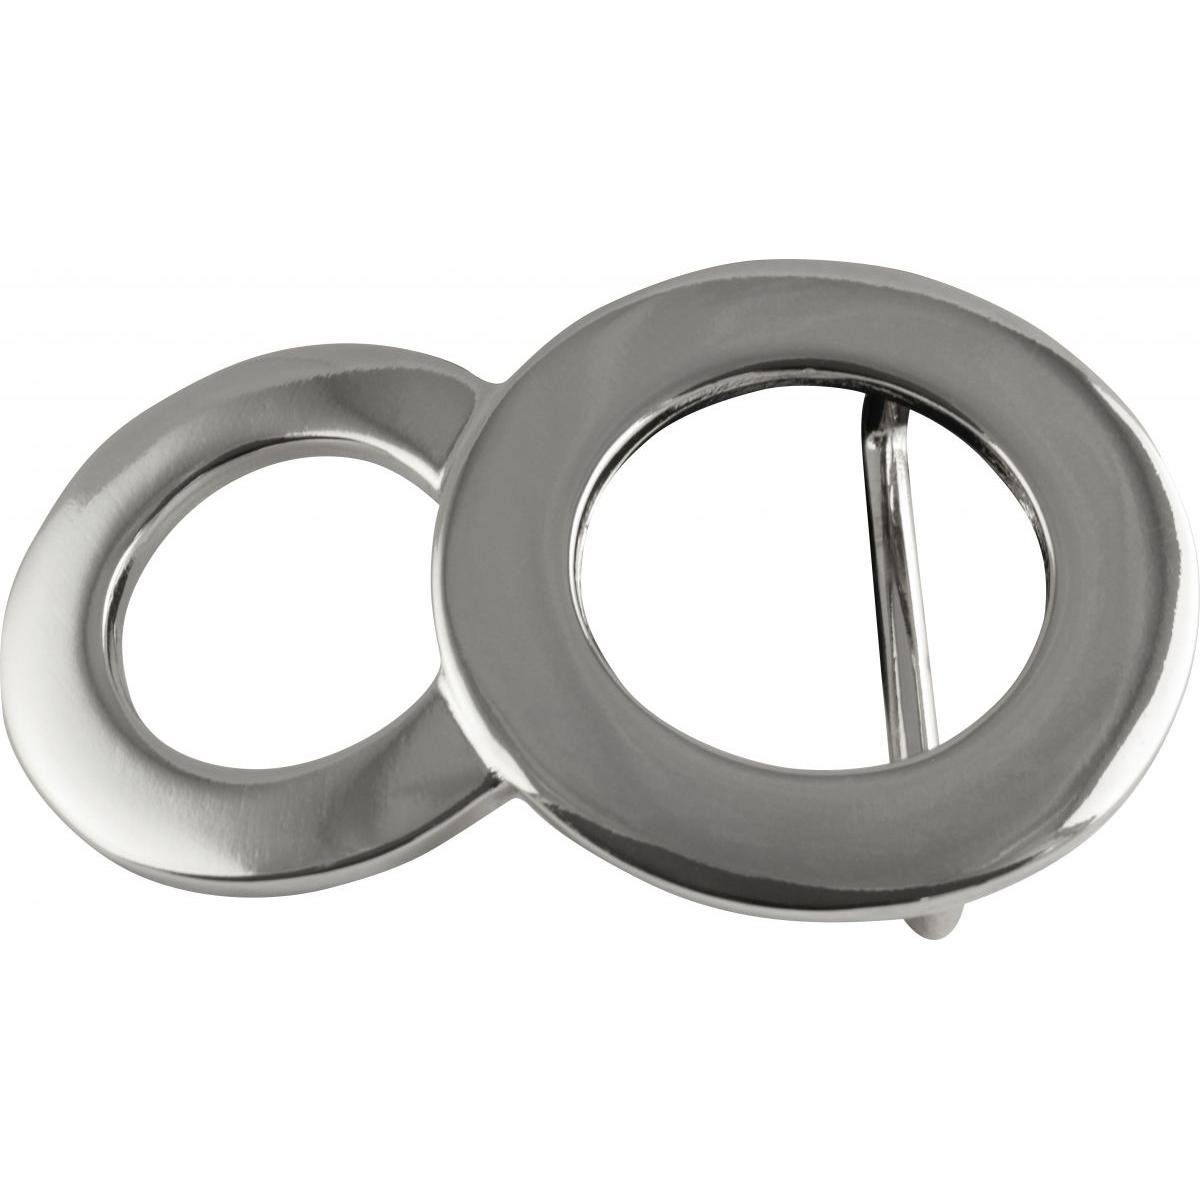 BELTINGER Gürtelschnalle Ringe 4,0 cm - Buckle Wechselschließe Gürtelschließe 40mm - Gürtel bis Silber glänzend